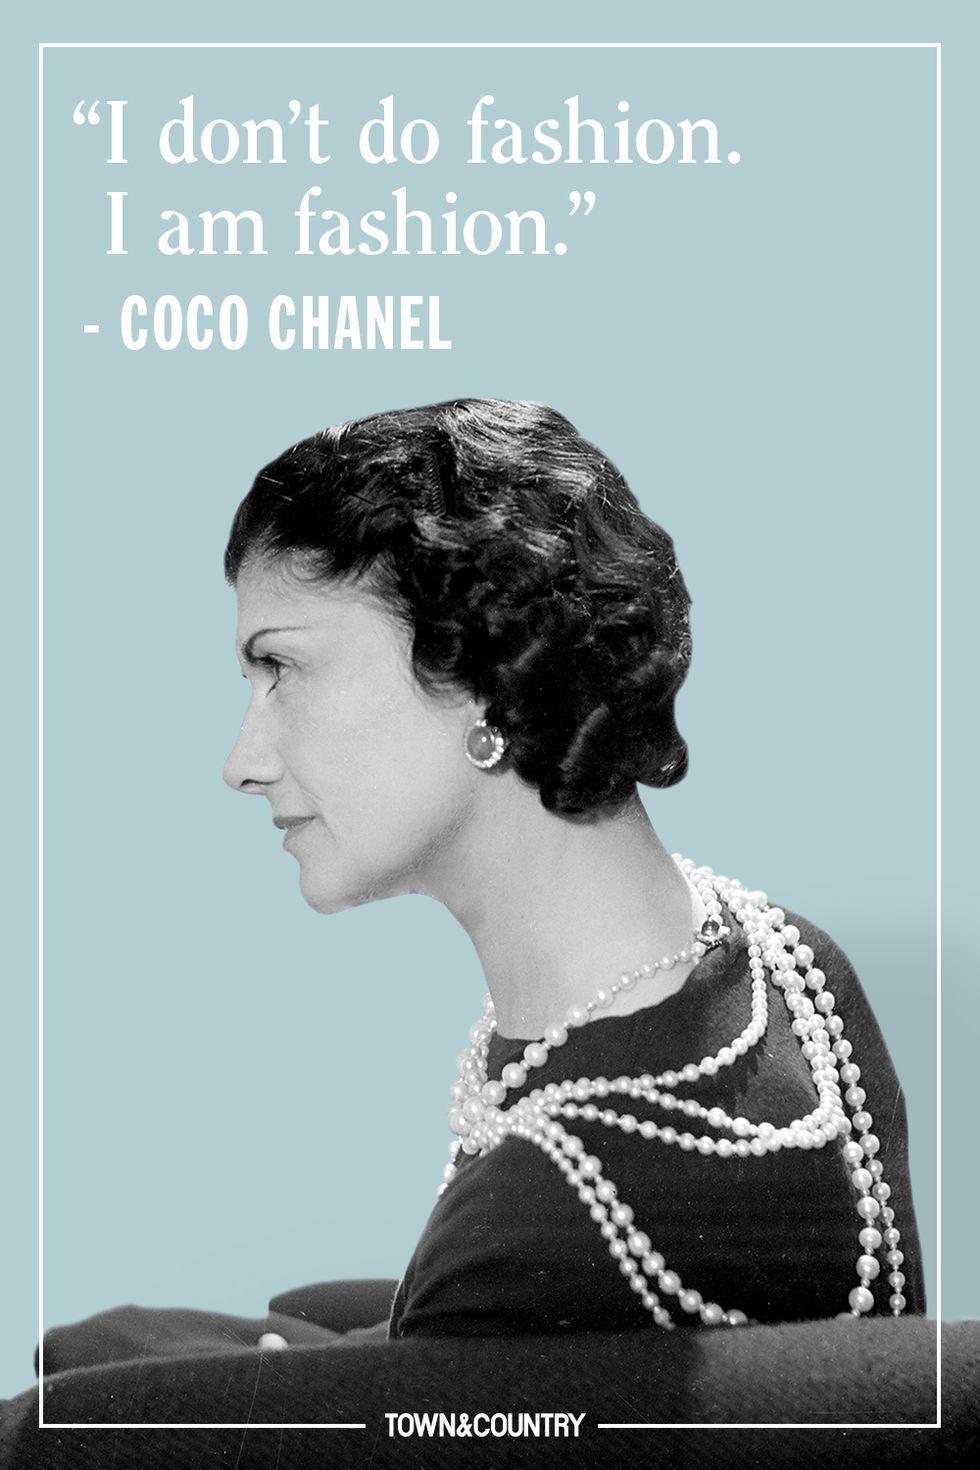 51 Inspiring Coco Chanel Quotes FASHION